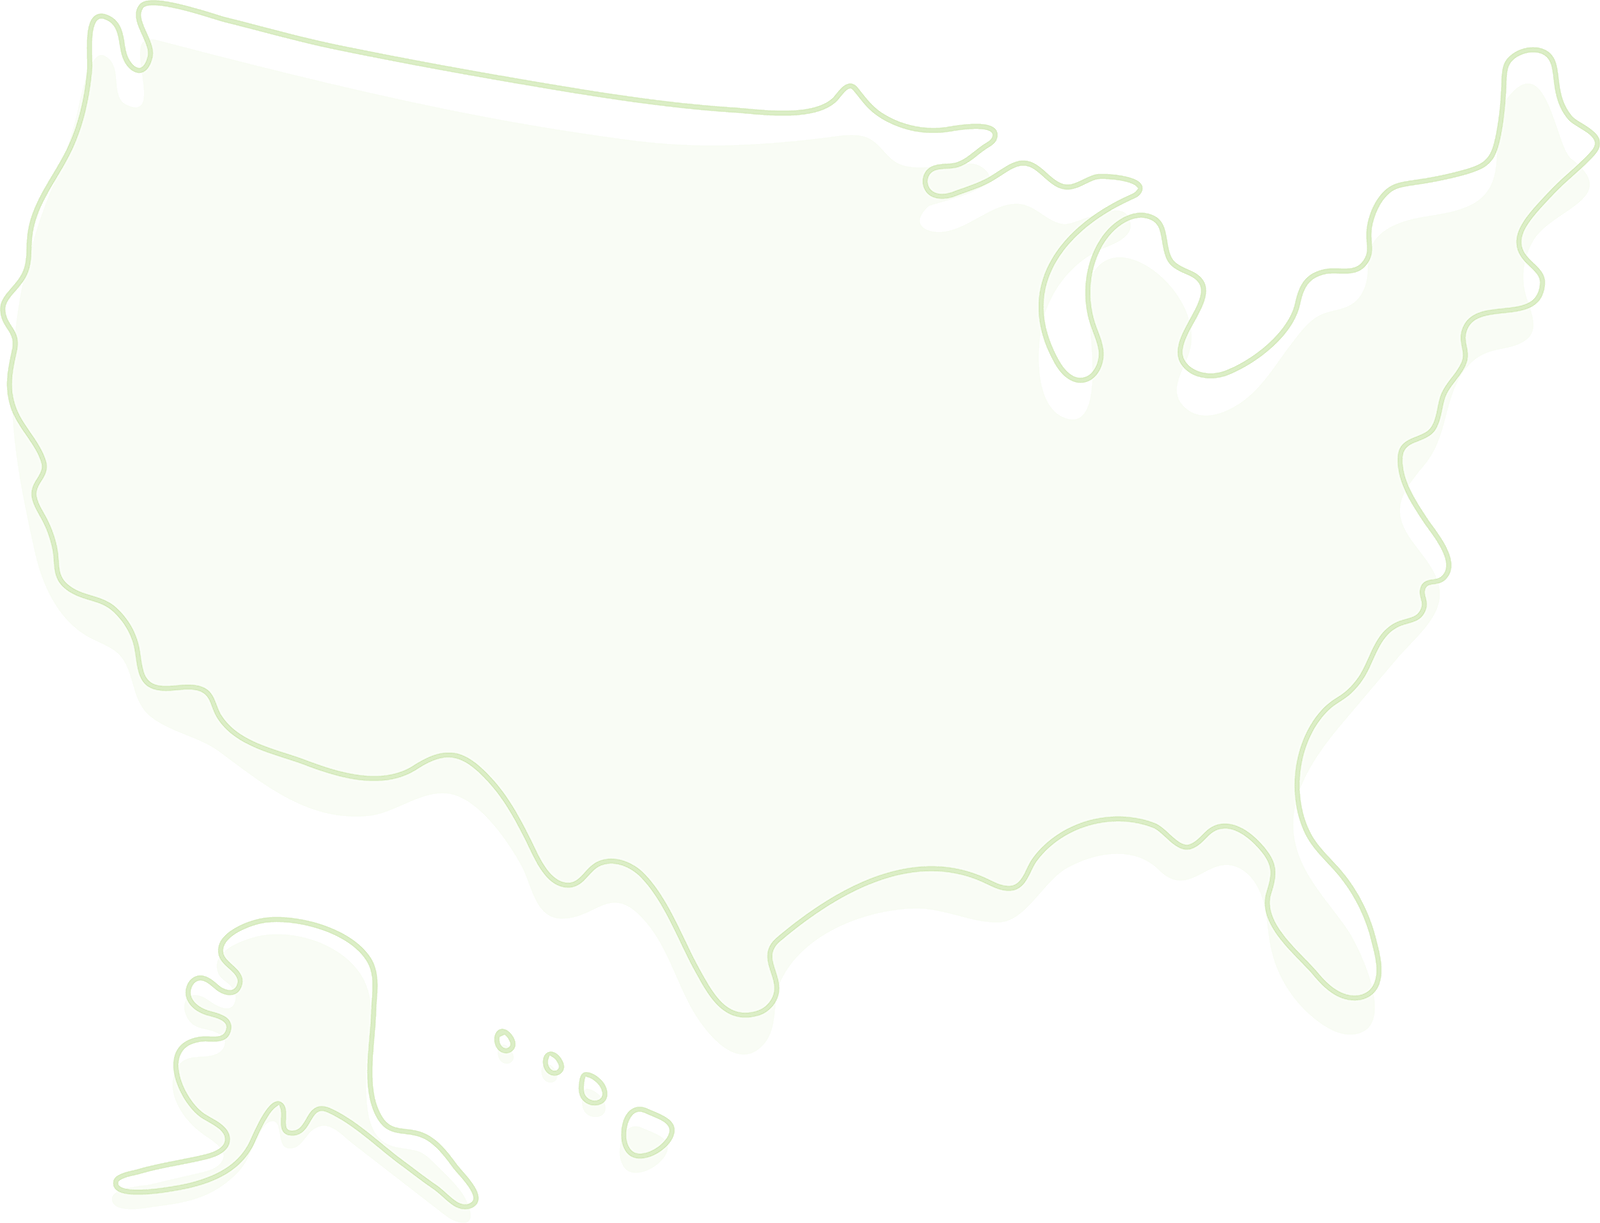 drawing of USA